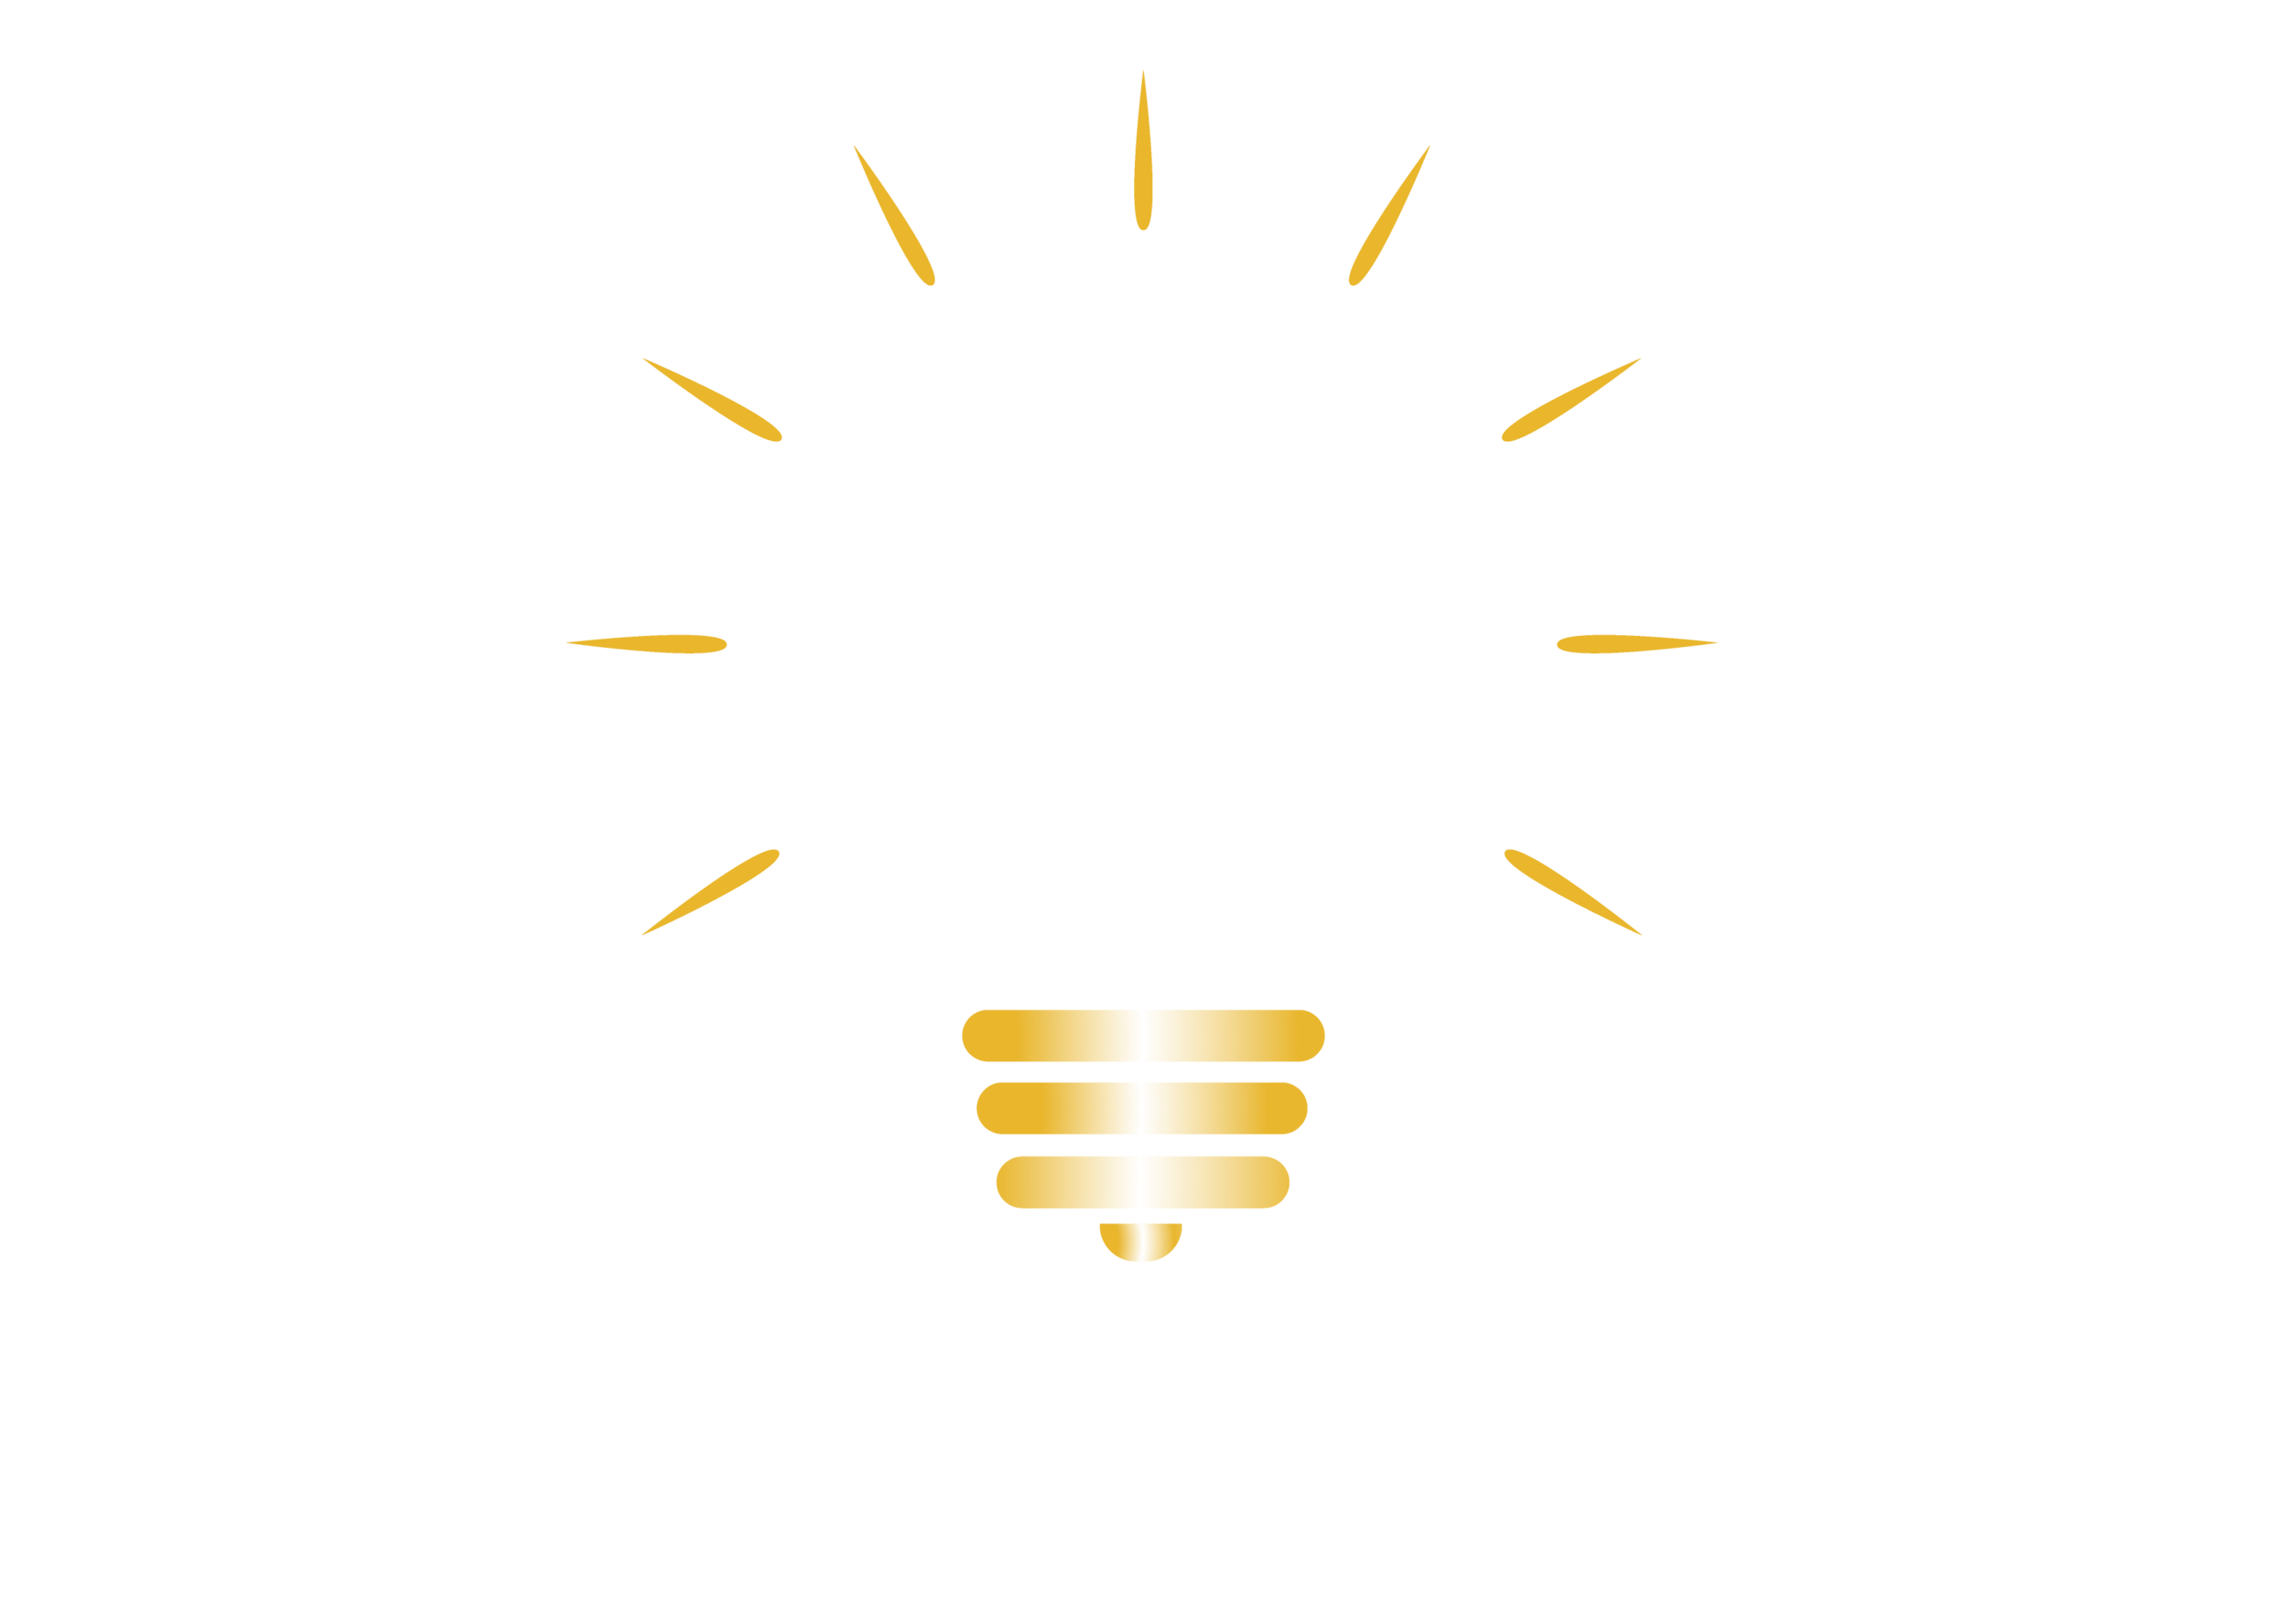 The Pavon Firm